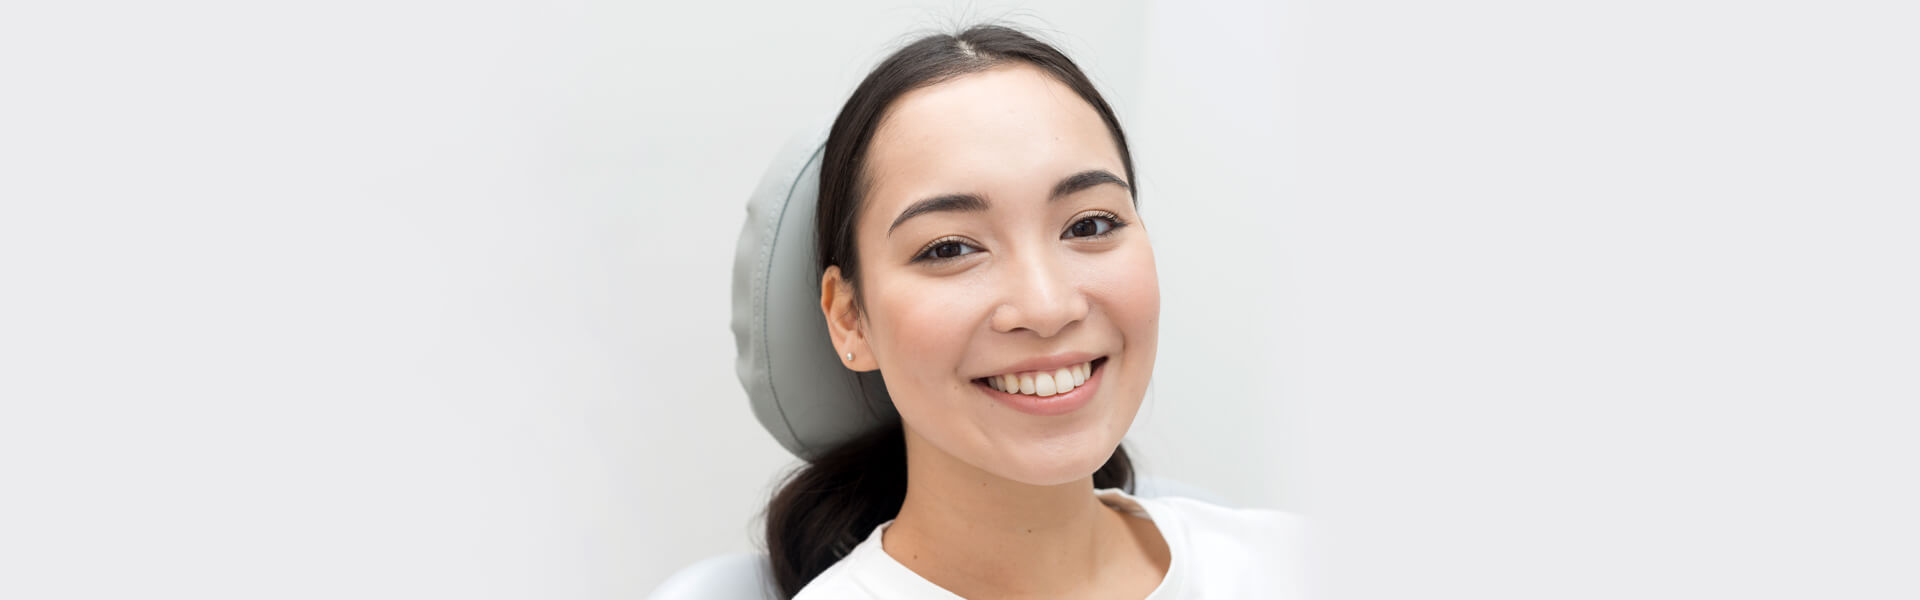 Dental Attrition Treatment Might Require a Dental Crown Restoration